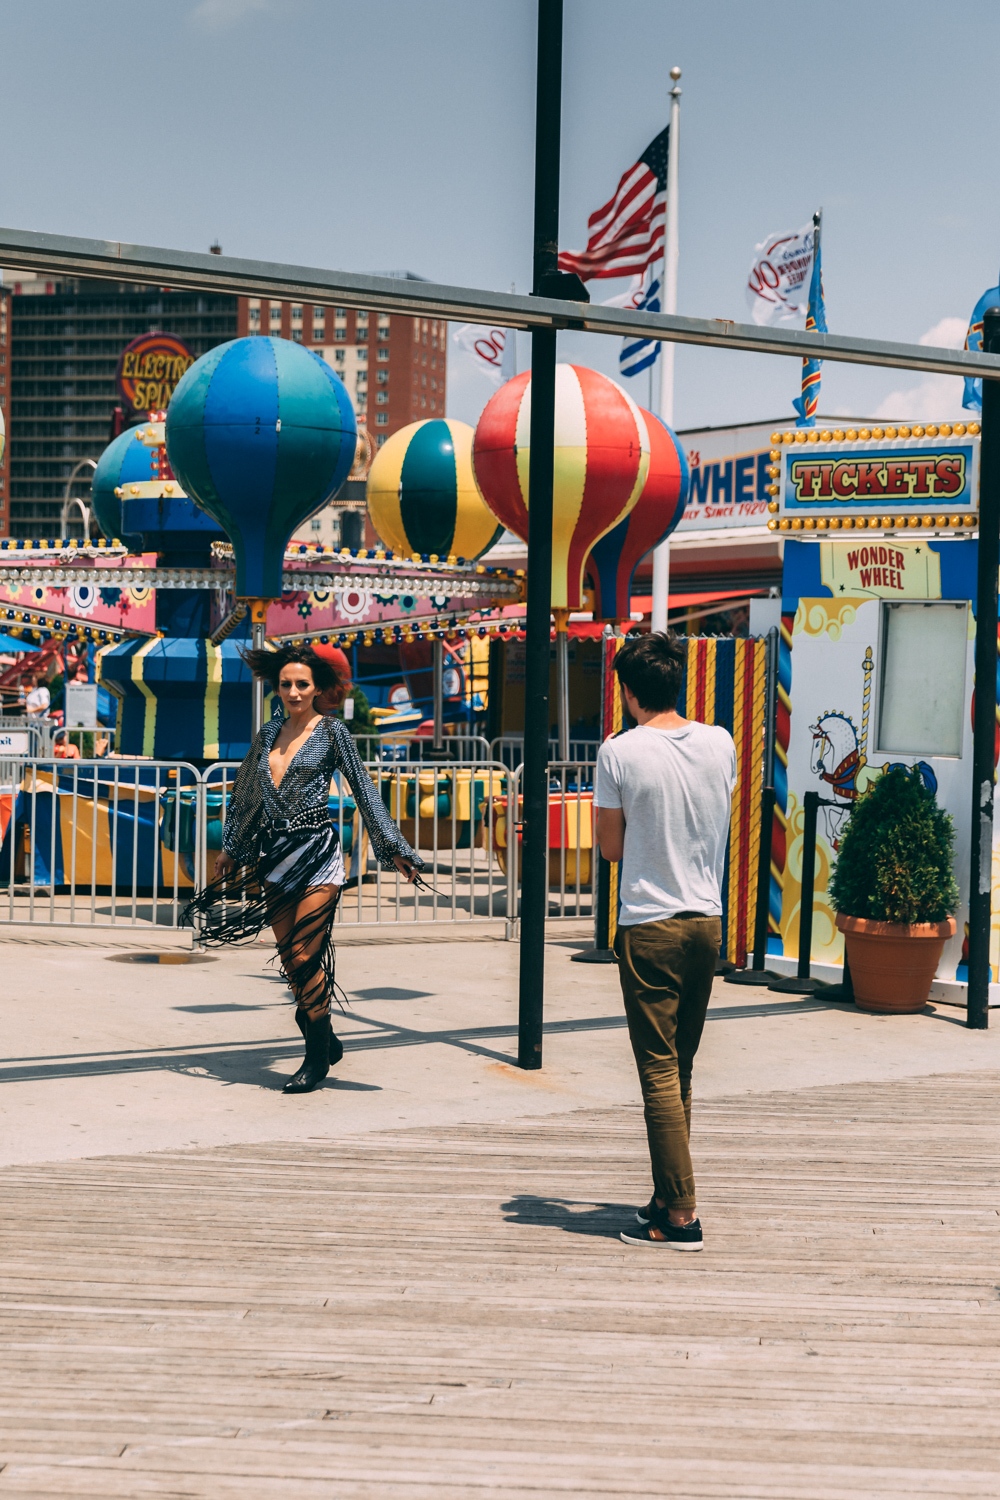 Coney Island Amusement Park in New York City.